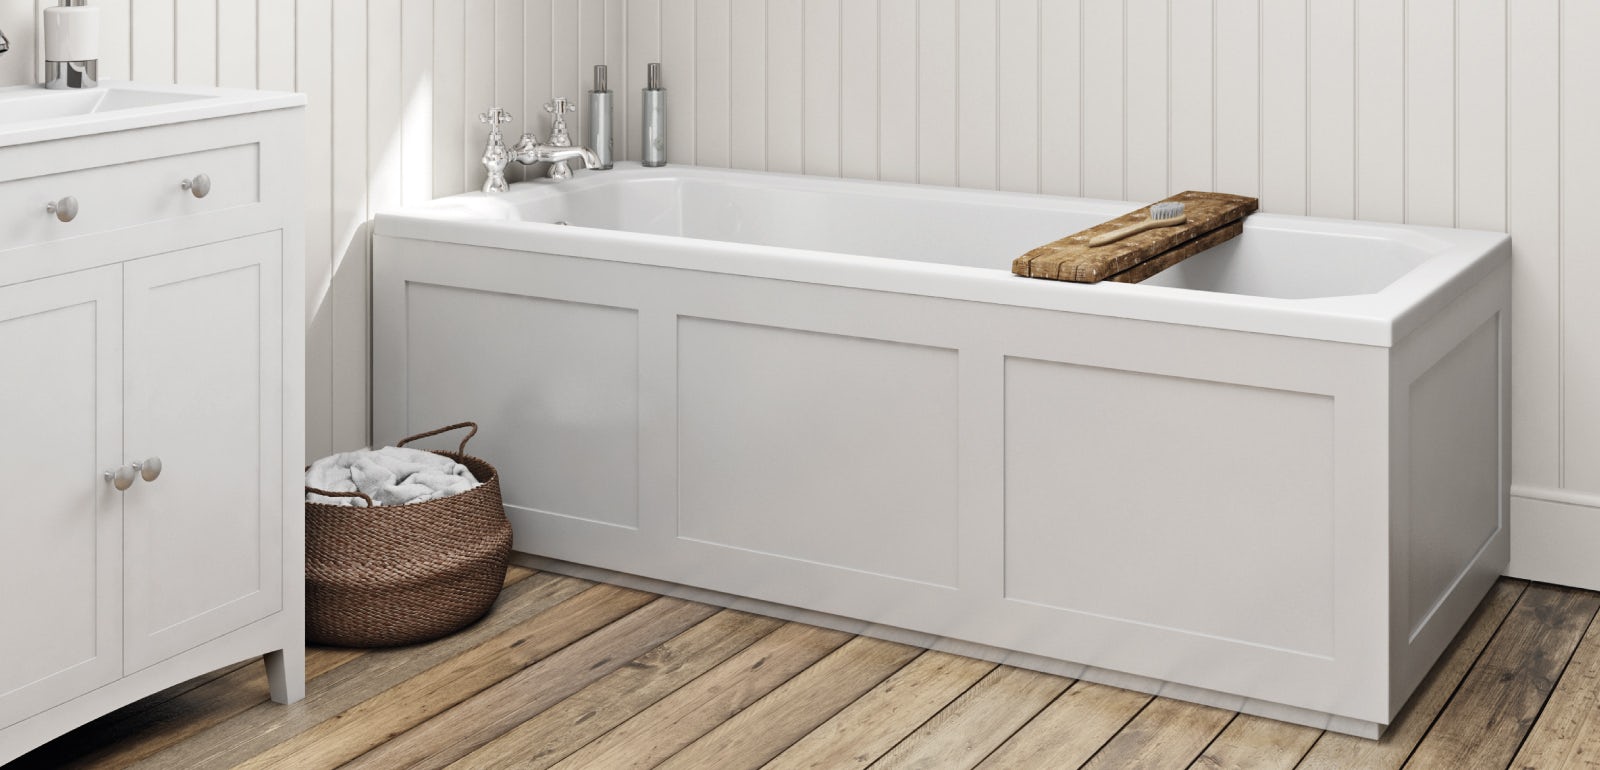 How to Fit a Wooden Bath Panel | VictoriaPlum.com